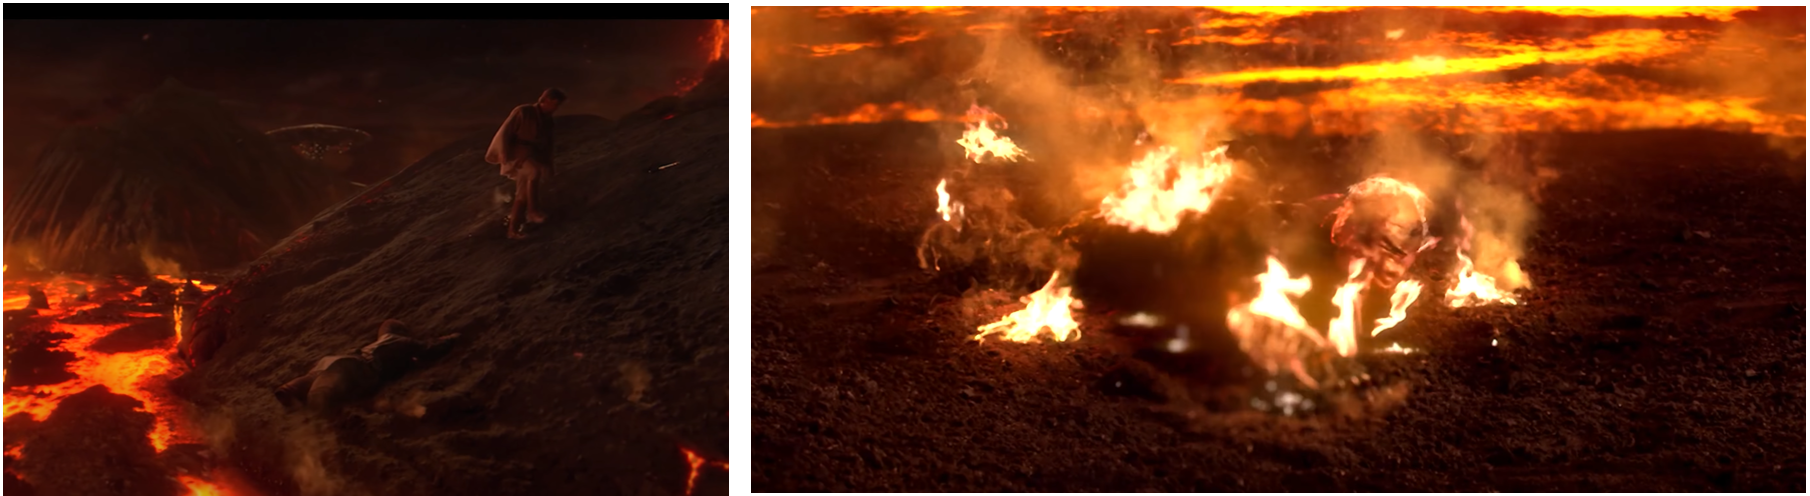 Image stills from the Star Wars series. More descrpiton below.